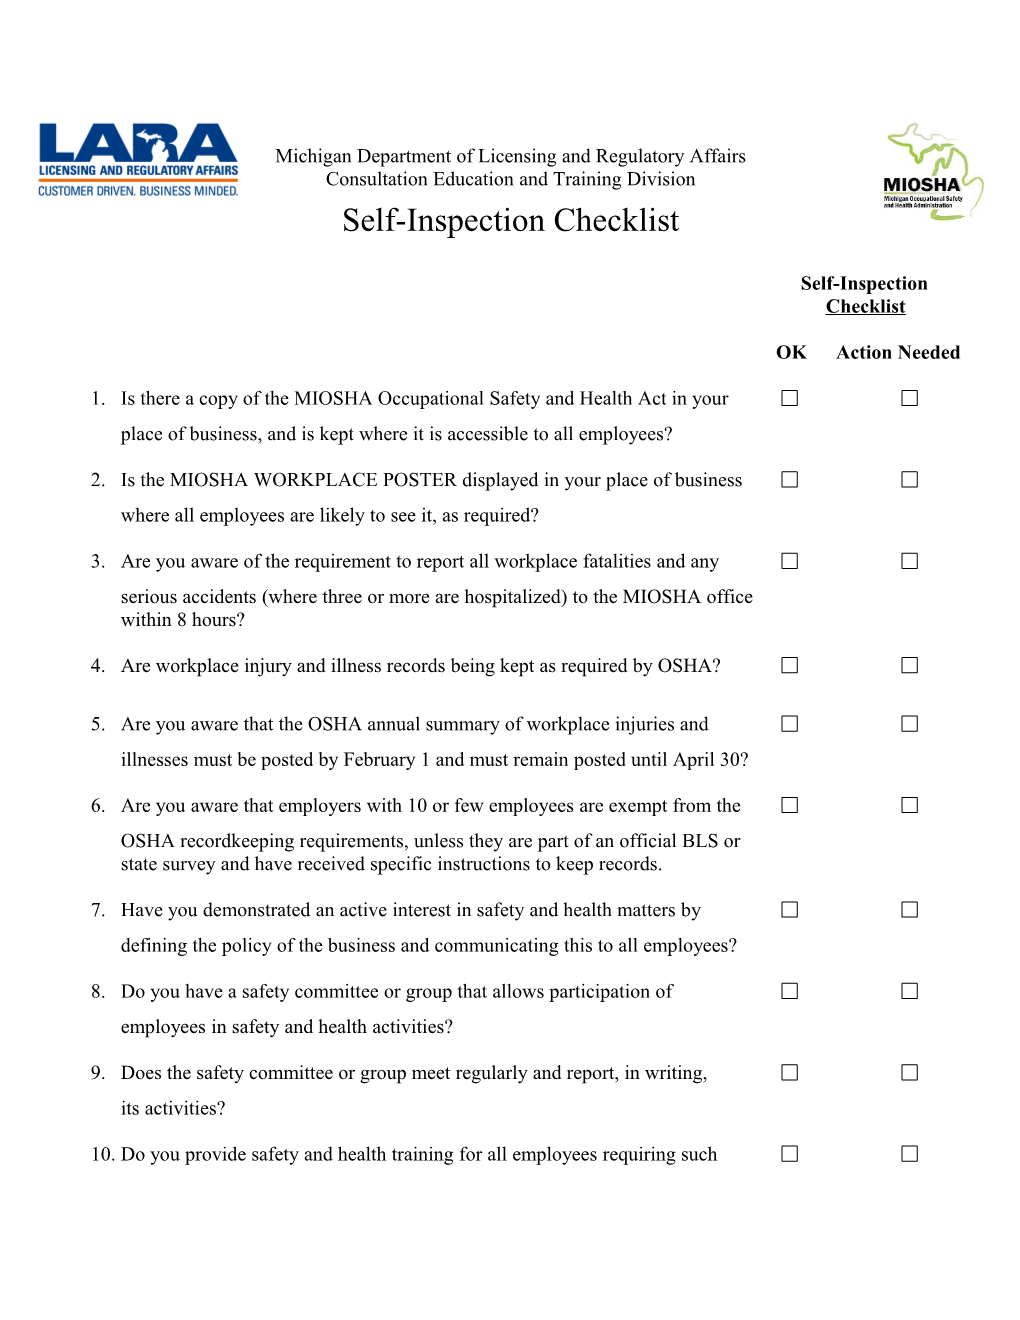 MIOSHA Self Inspection Checklist